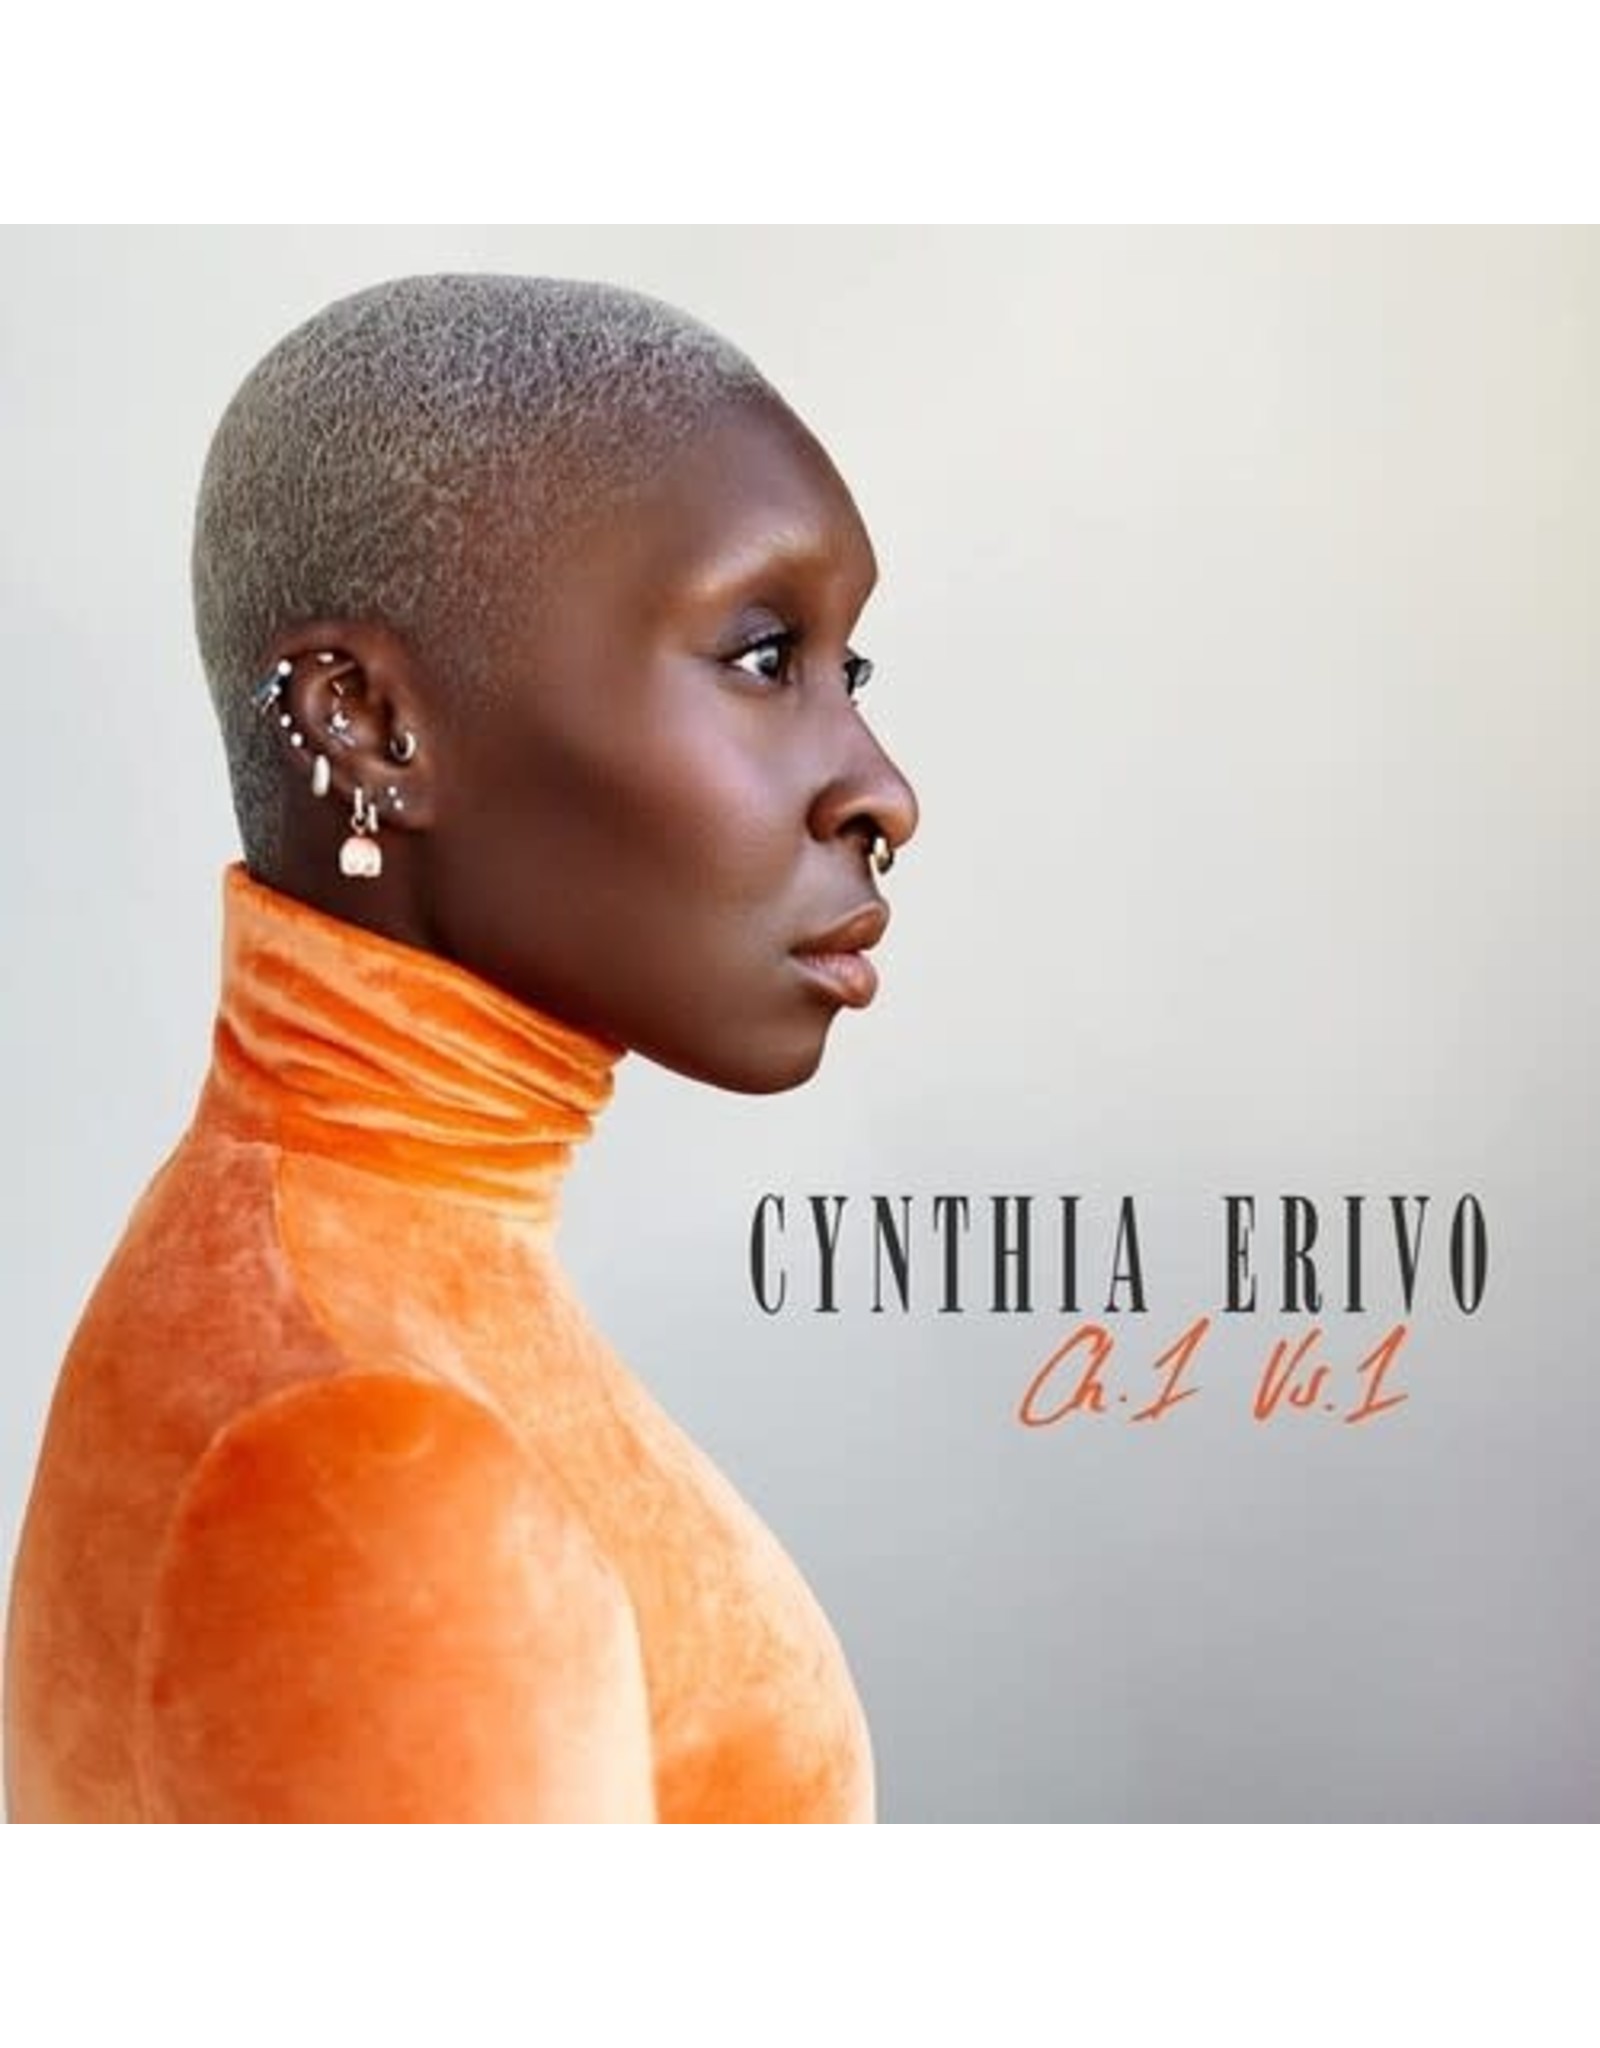 New Vinyl Cynthia Erivo - Ch. 1 Vs. 1 2LP